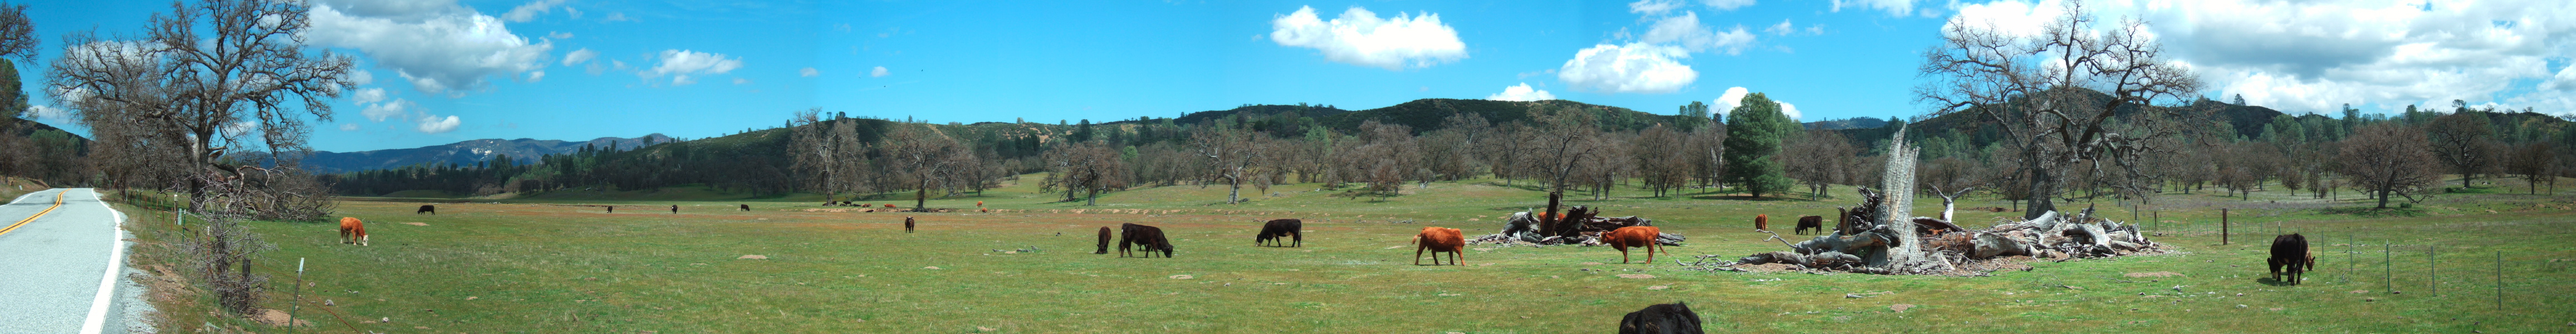 Cattle graze the wildflower bed in Upper San Antonio Valley.